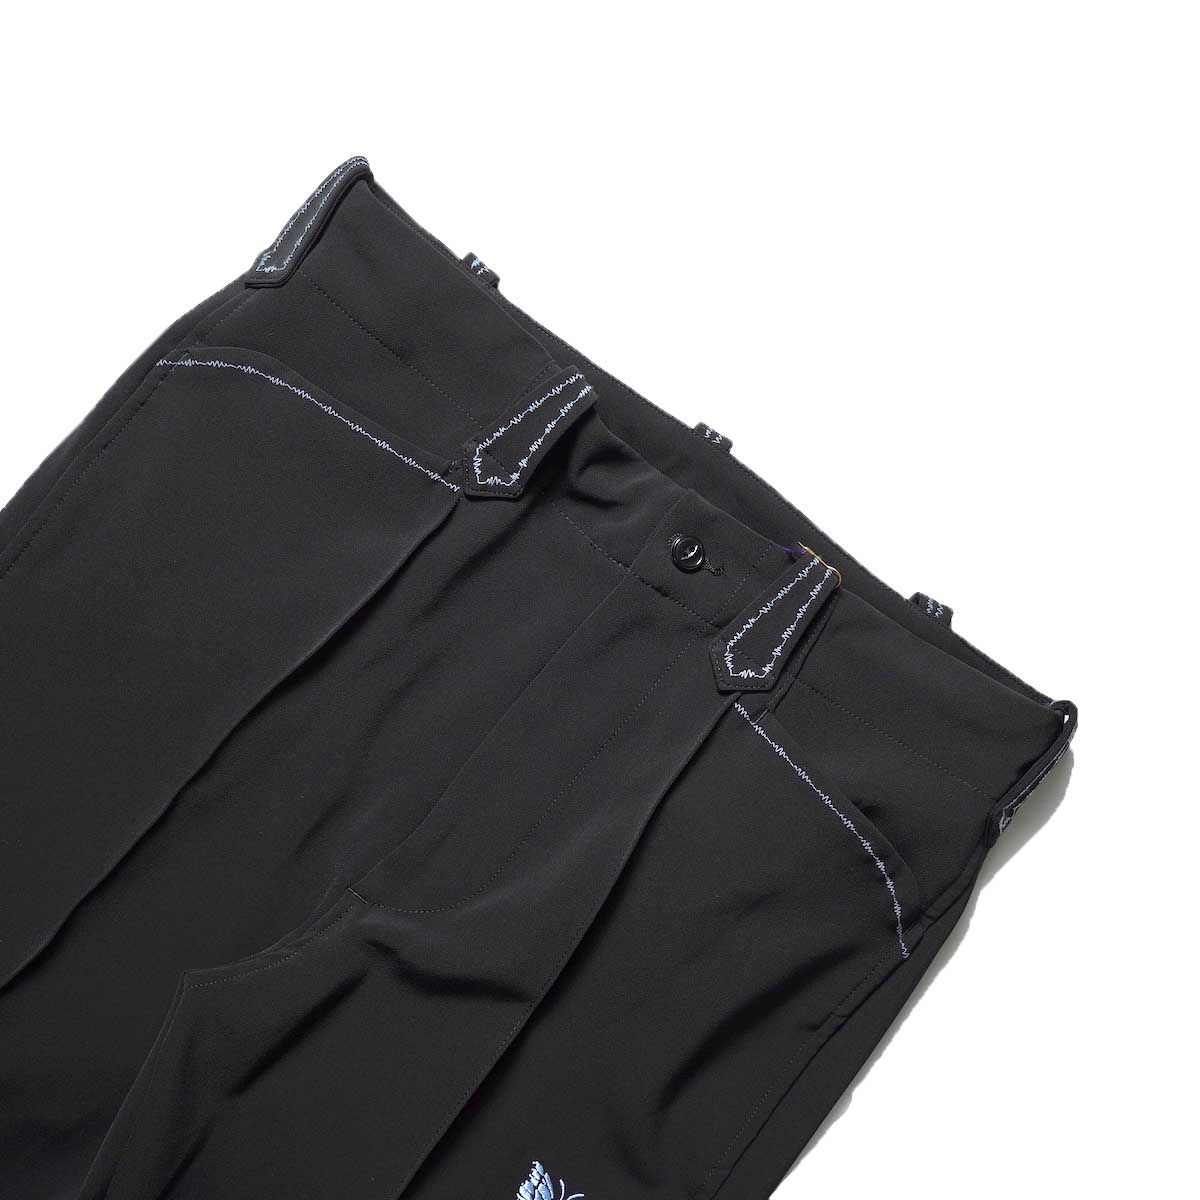 Needles / Western Leisure Pant - PE/PU Double Cloth (Black)ウエスト